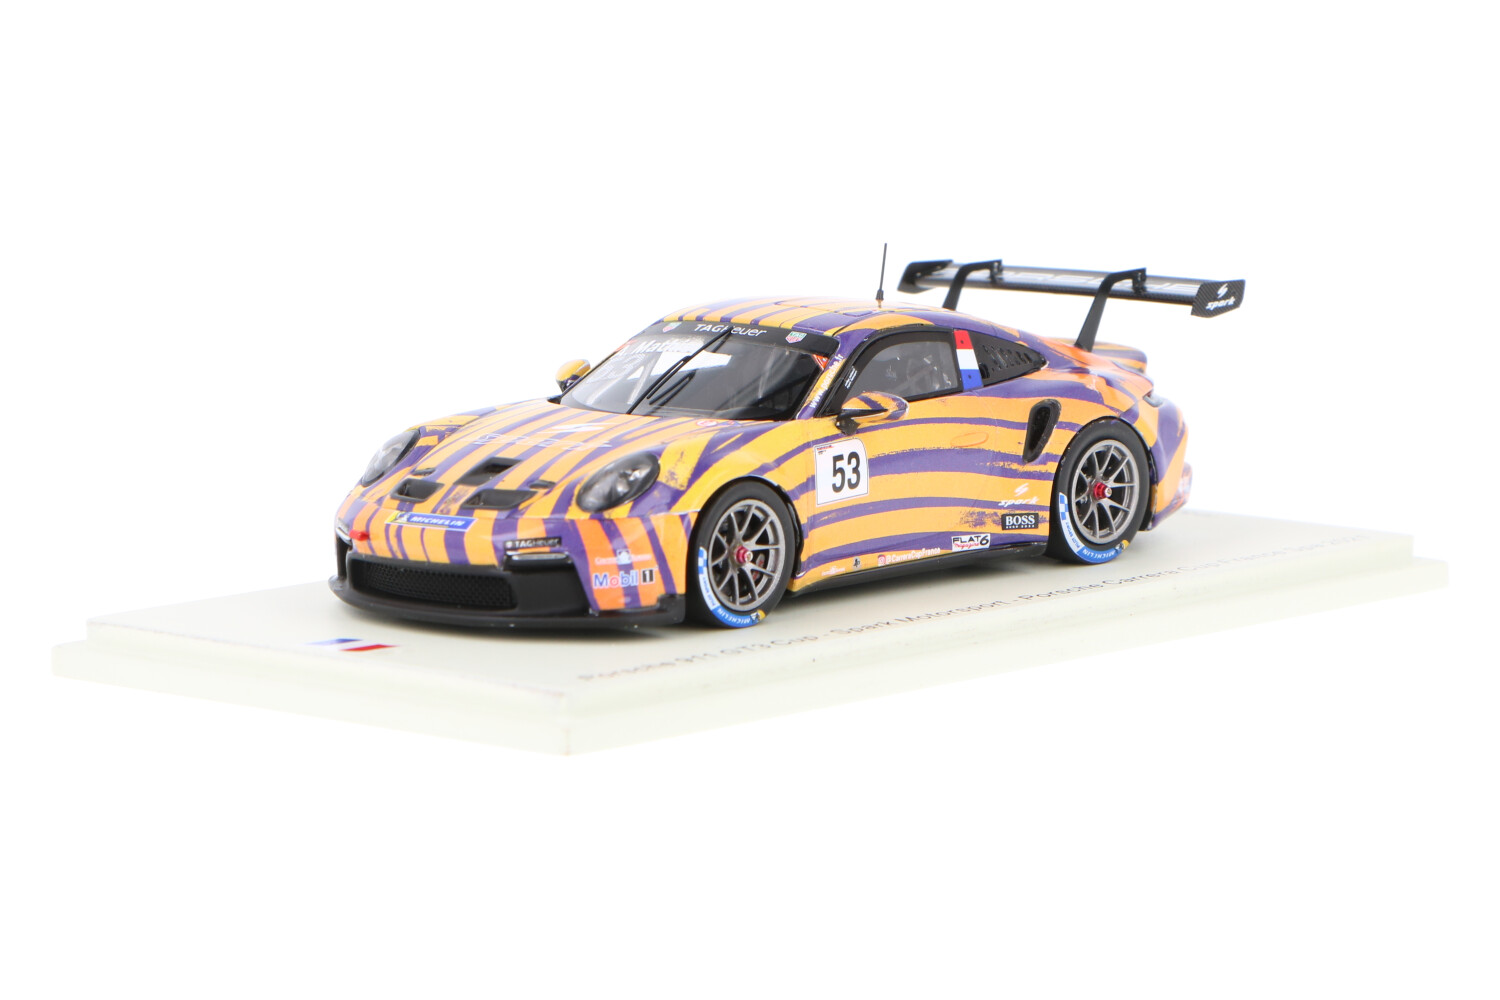 Porsche/Auto Union 911 GT3 Cup - Modelauto schaal 1:43